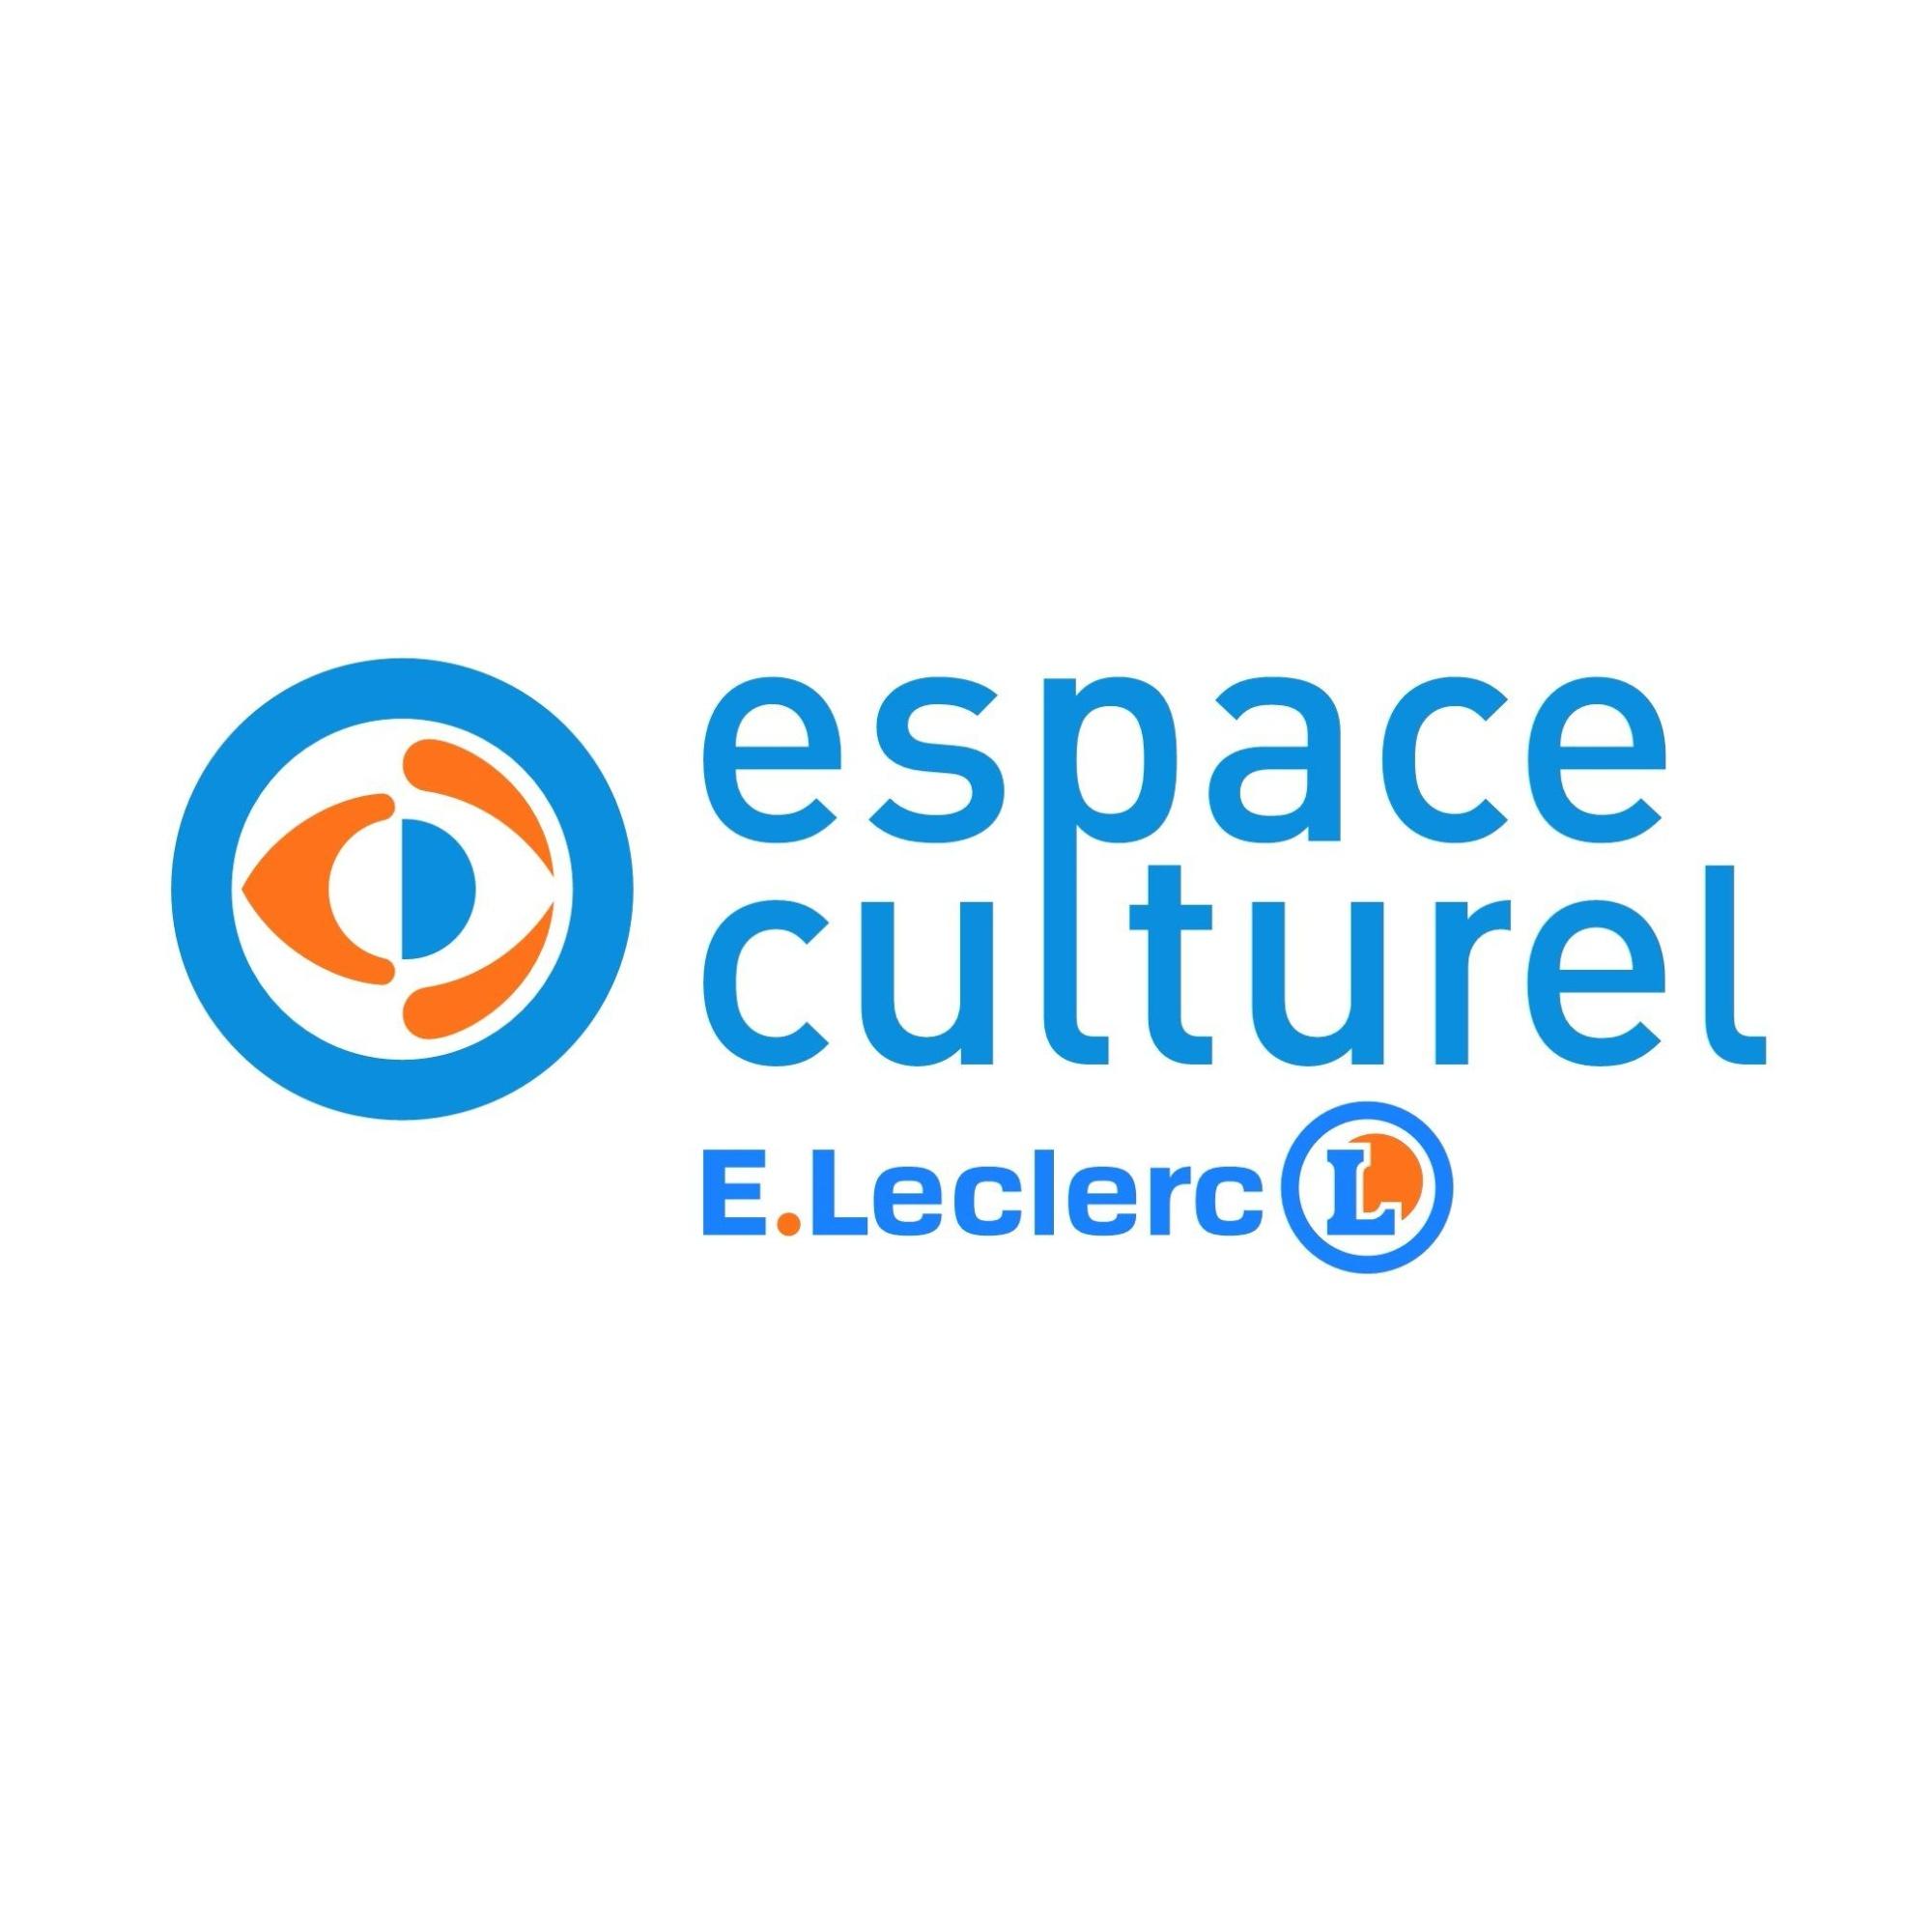 E.leclerc Espace Culturel Plérin